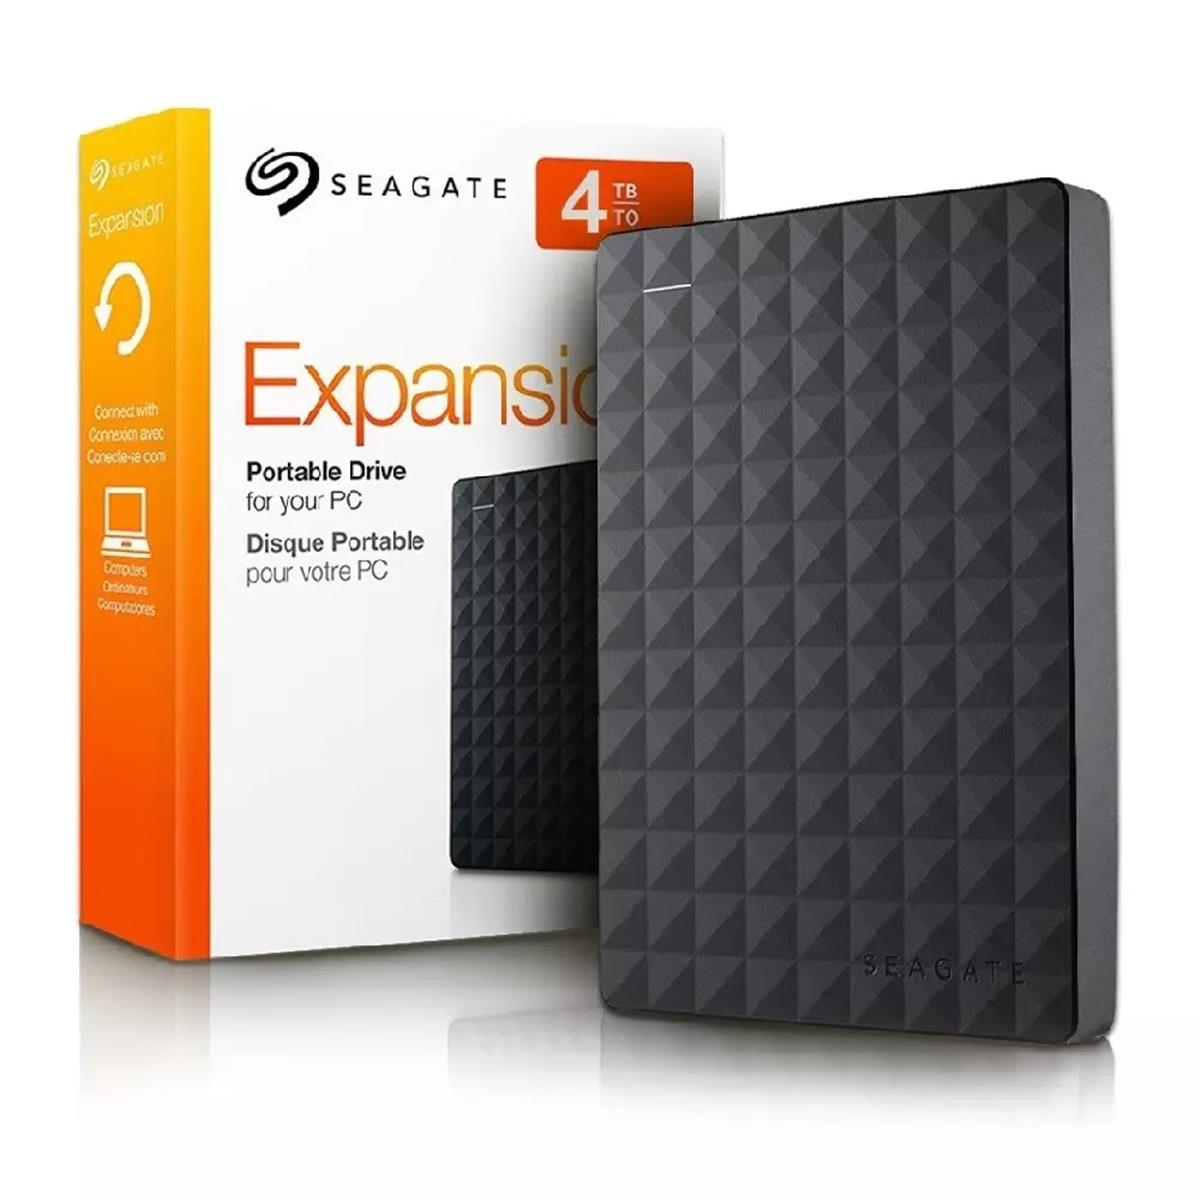 HD Externo Seagate Basic, 4TB, USB 3.0, Black, STJL4000401